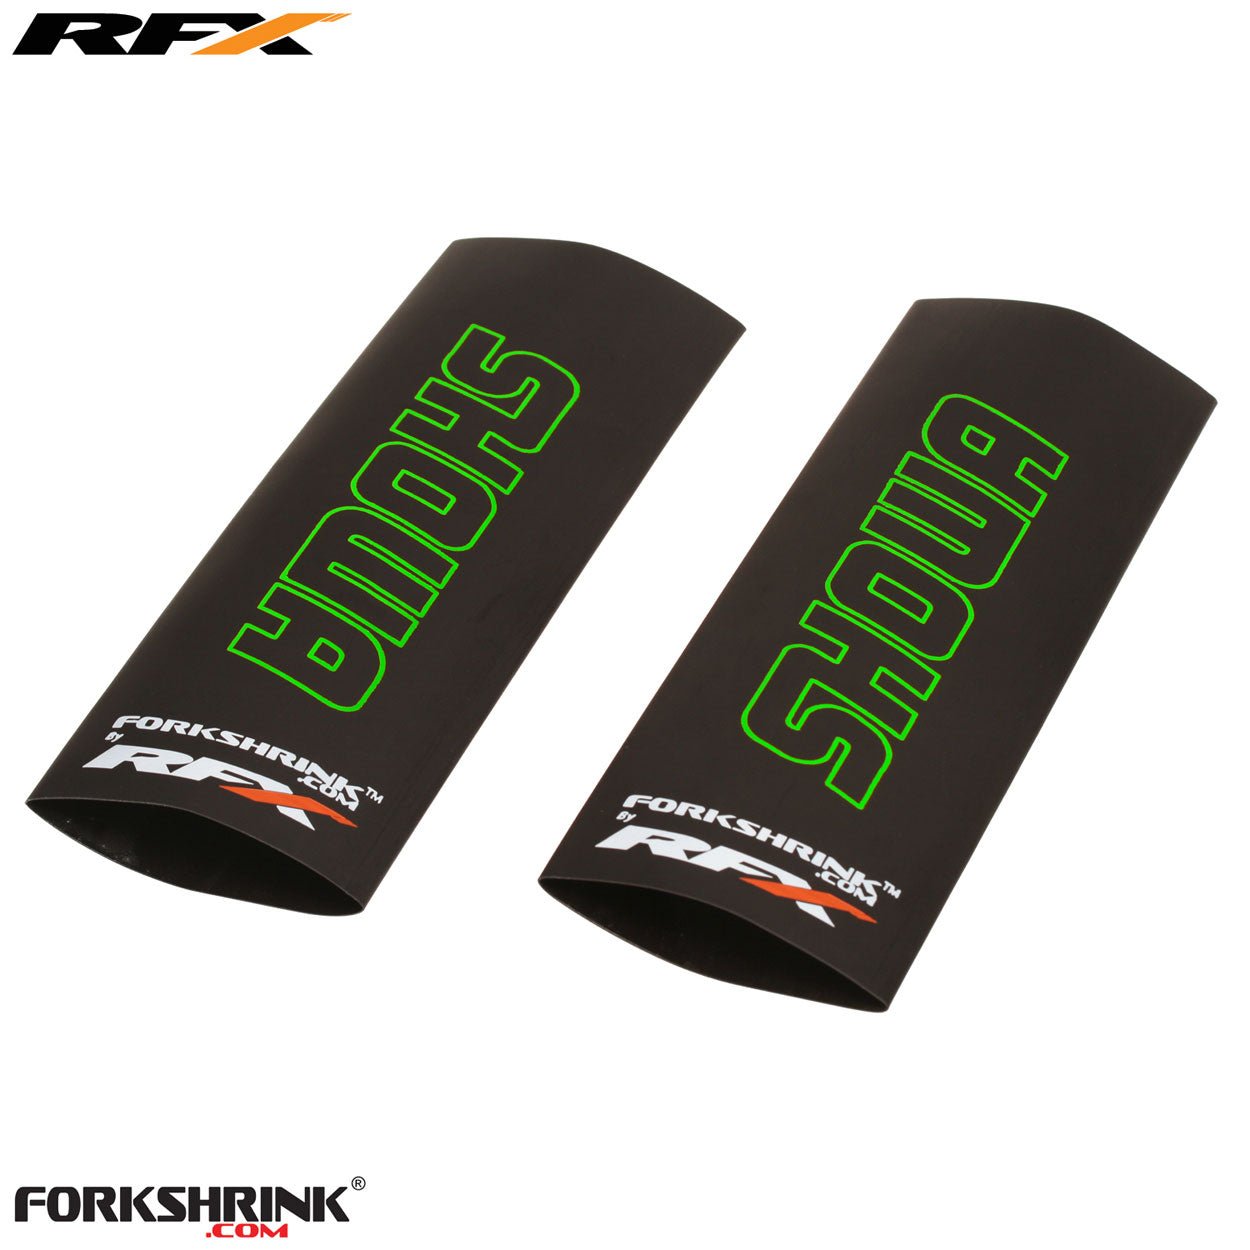 RFX Race Series Forkshrink Upper Fork Guard with Showa logo (Green) Universal 125cc-525cc - Green - RFX